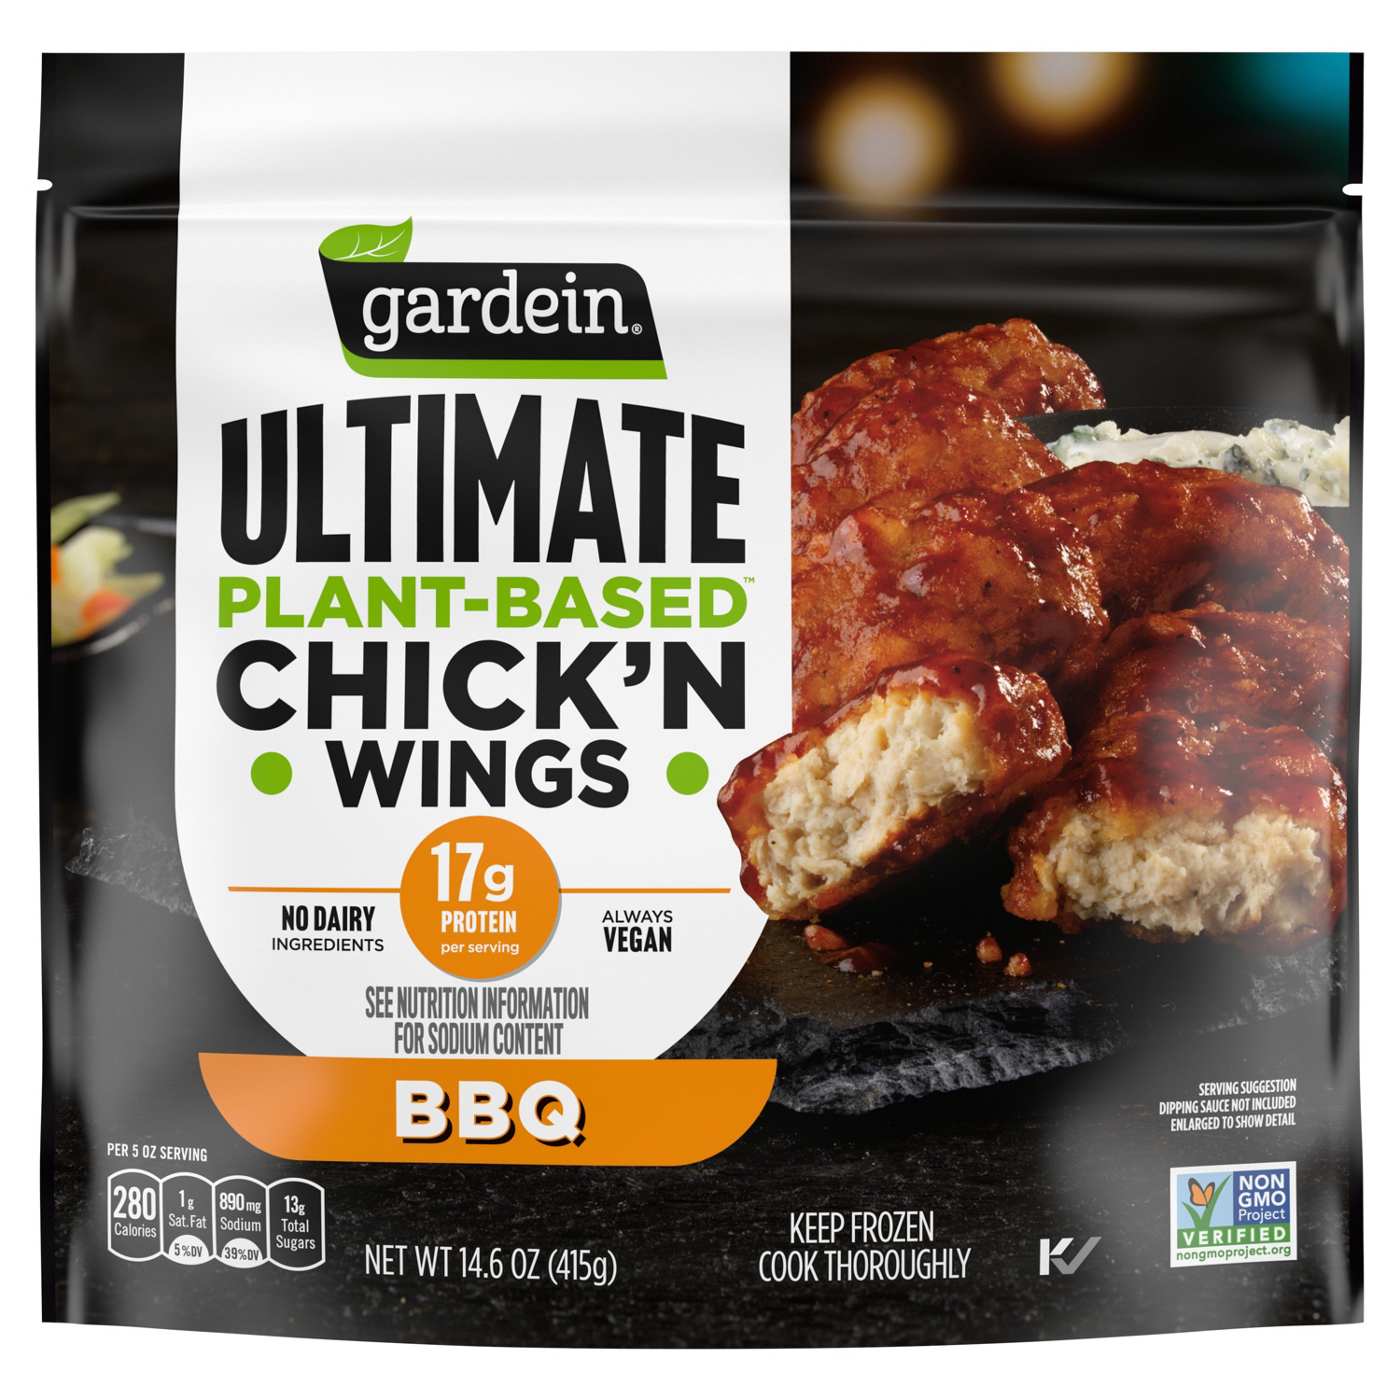 Gardein Ultimate Plant-Based Vegan BBQ Chick'n Wings; image 1 of 7